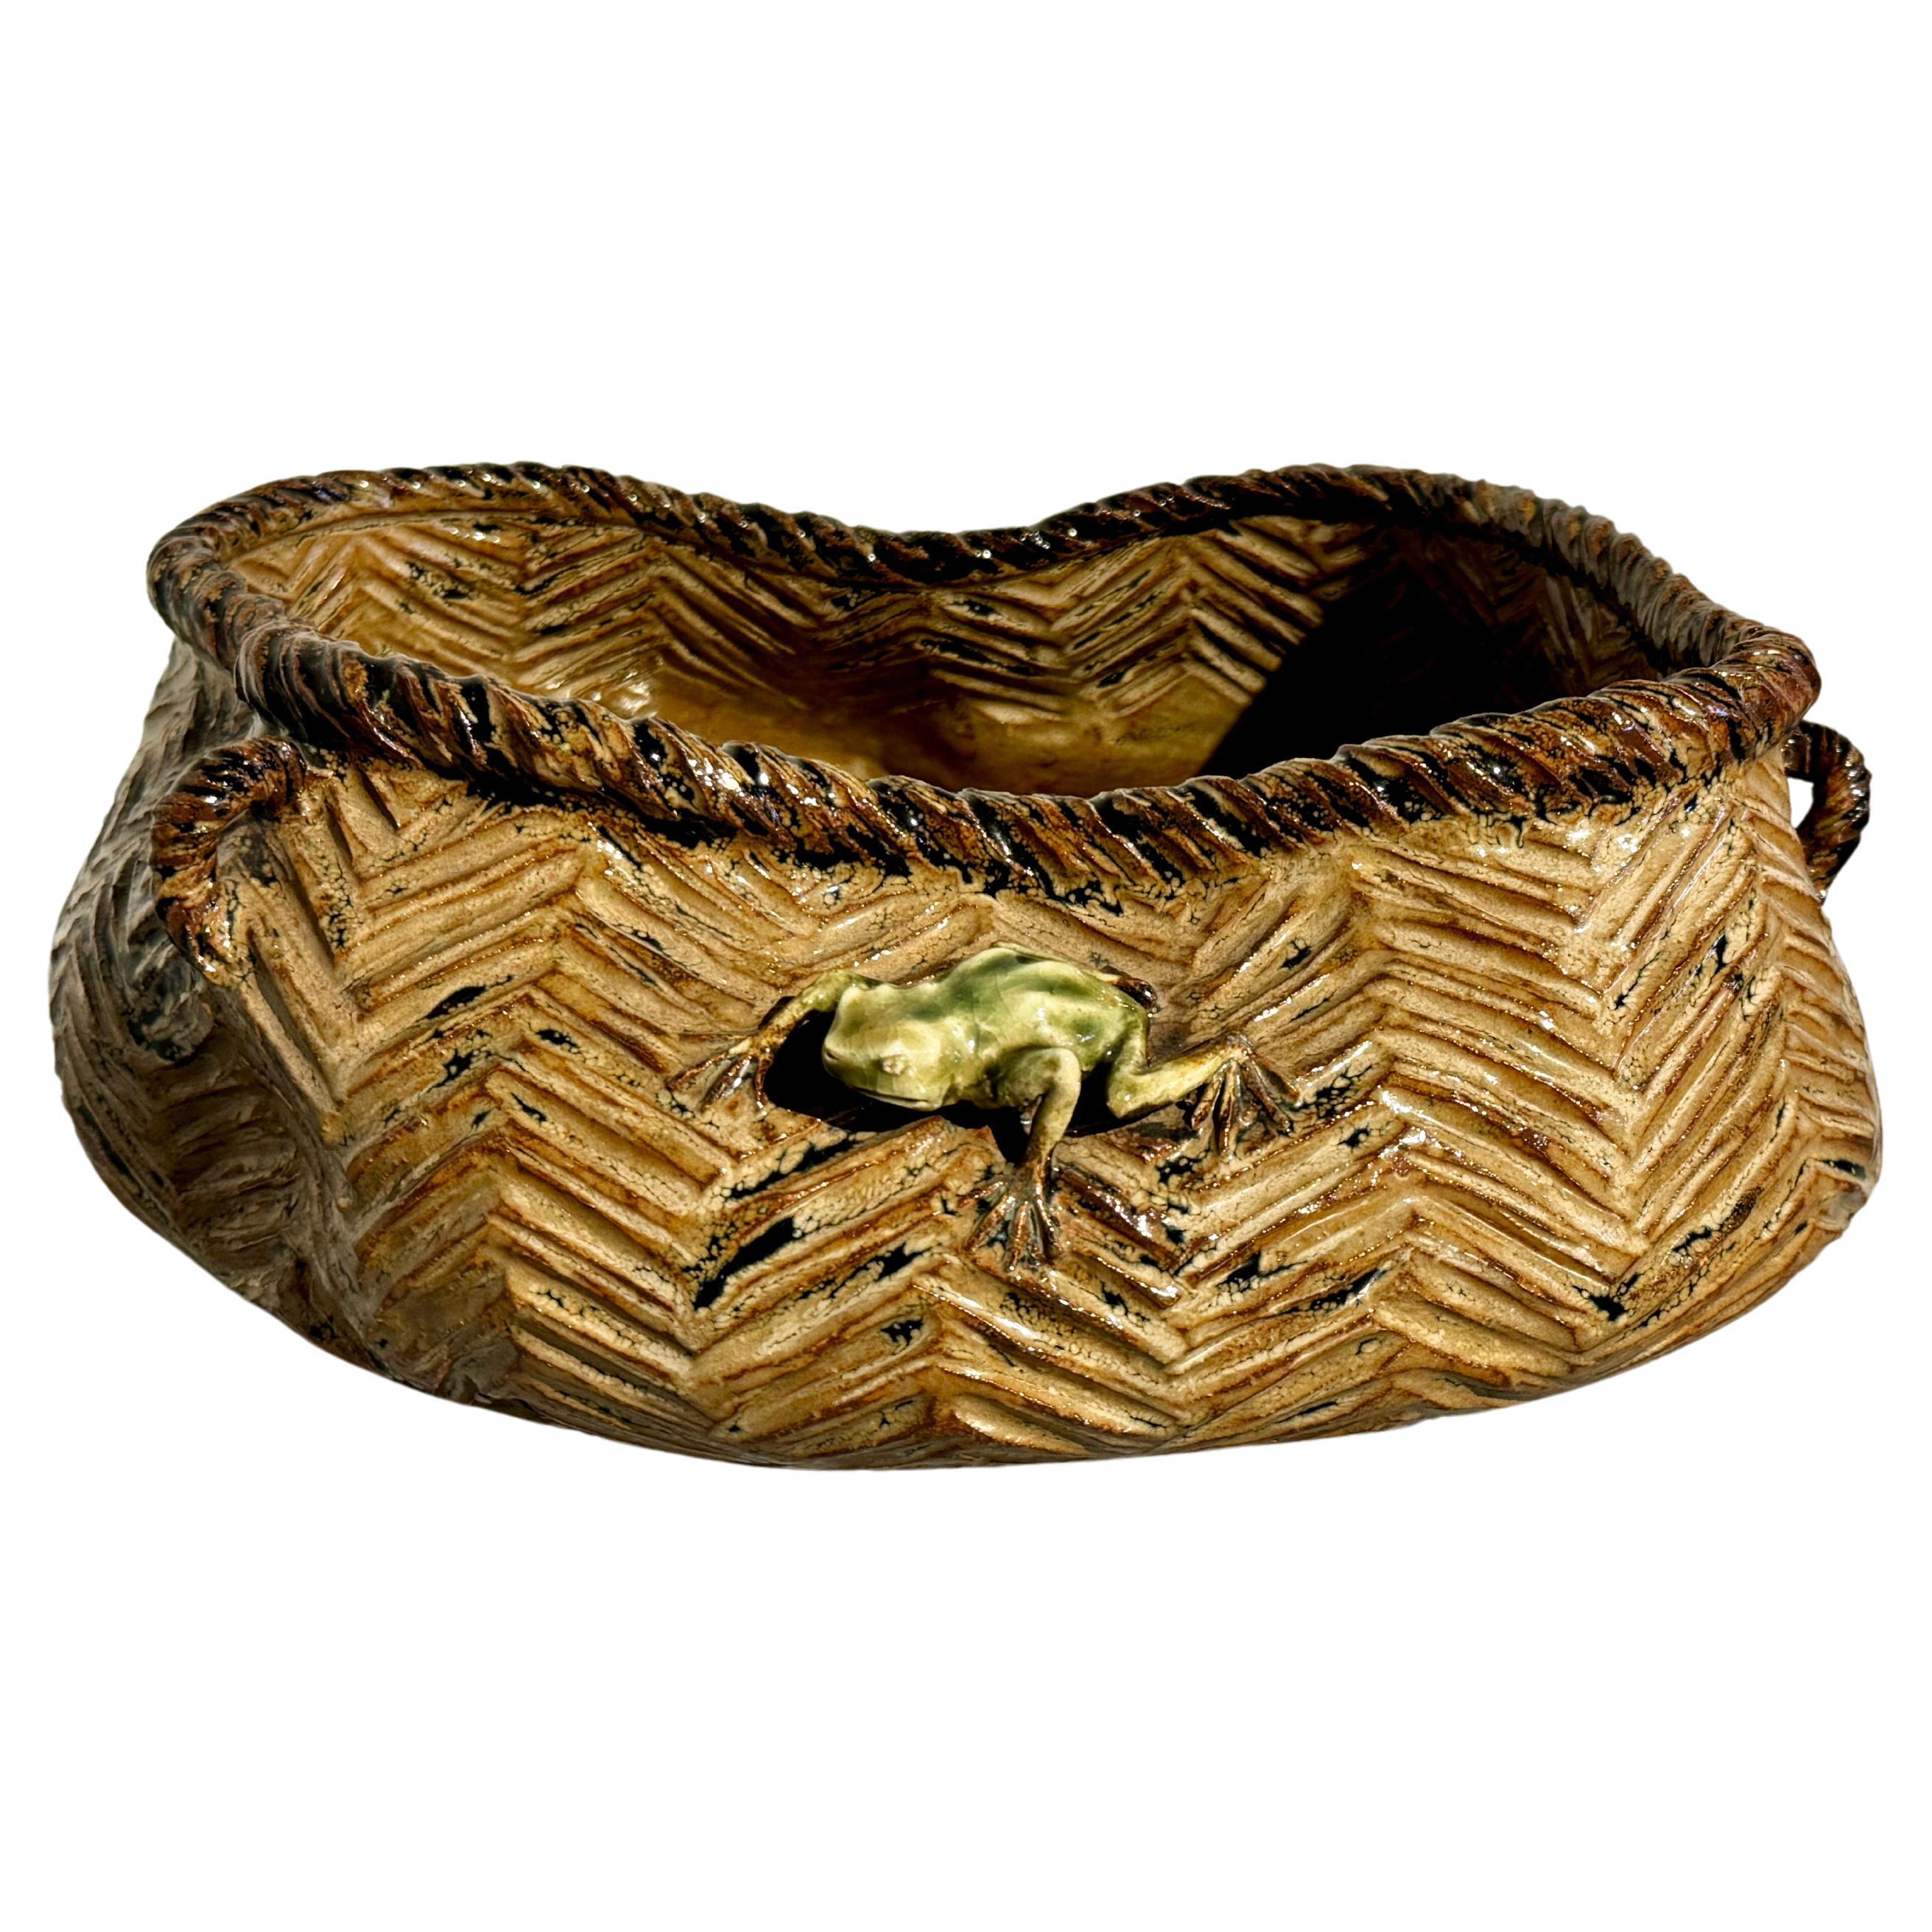 Ito Tozan I "Basket and Frog" Ceramic Vessel, Meiji Period, circa 1900, Japan For Sale